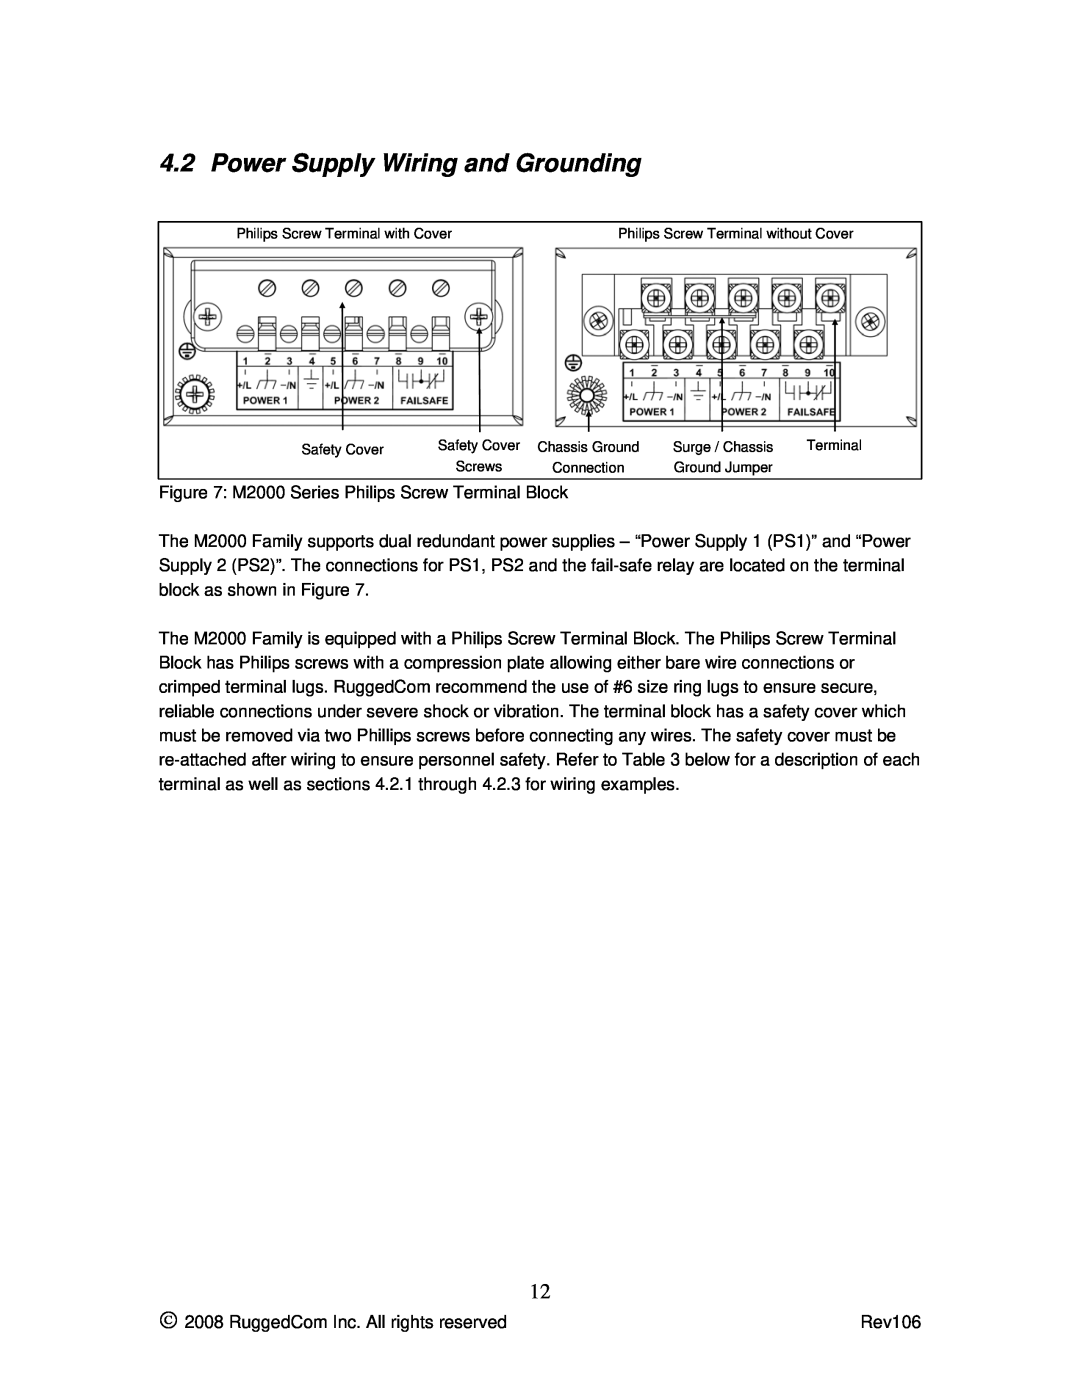 RuggedCom M2100 manual Power Supply Wiring and Grounding 